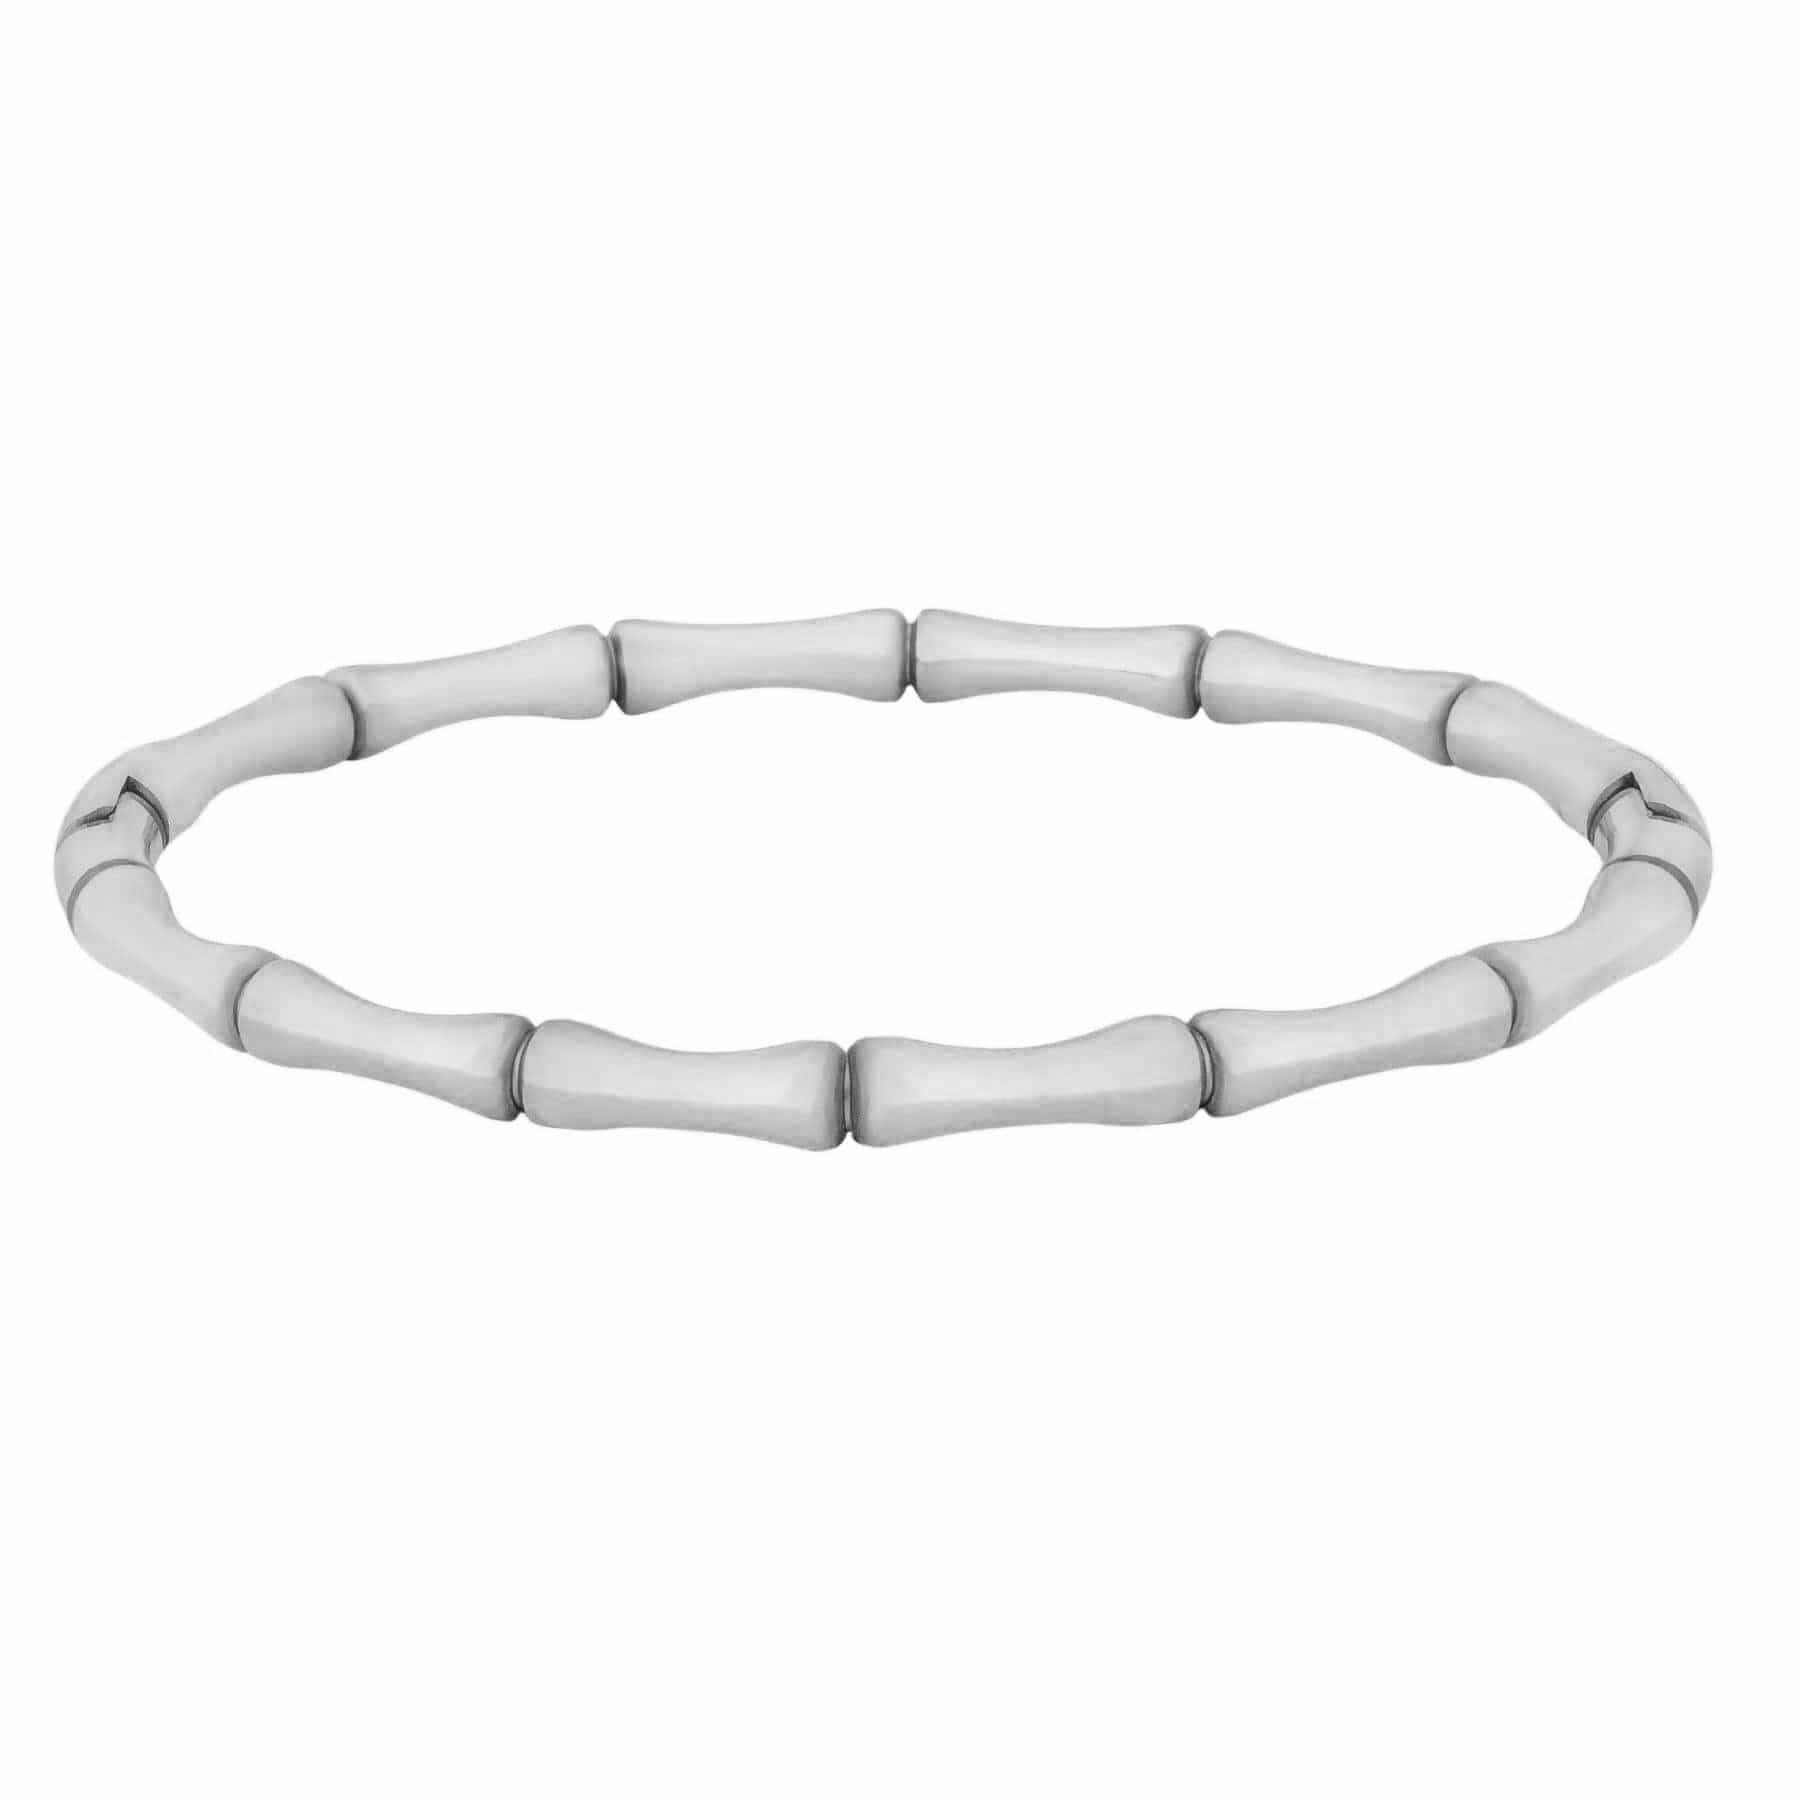 BohoMoon Stainless Steel Luella Bracelet Silver